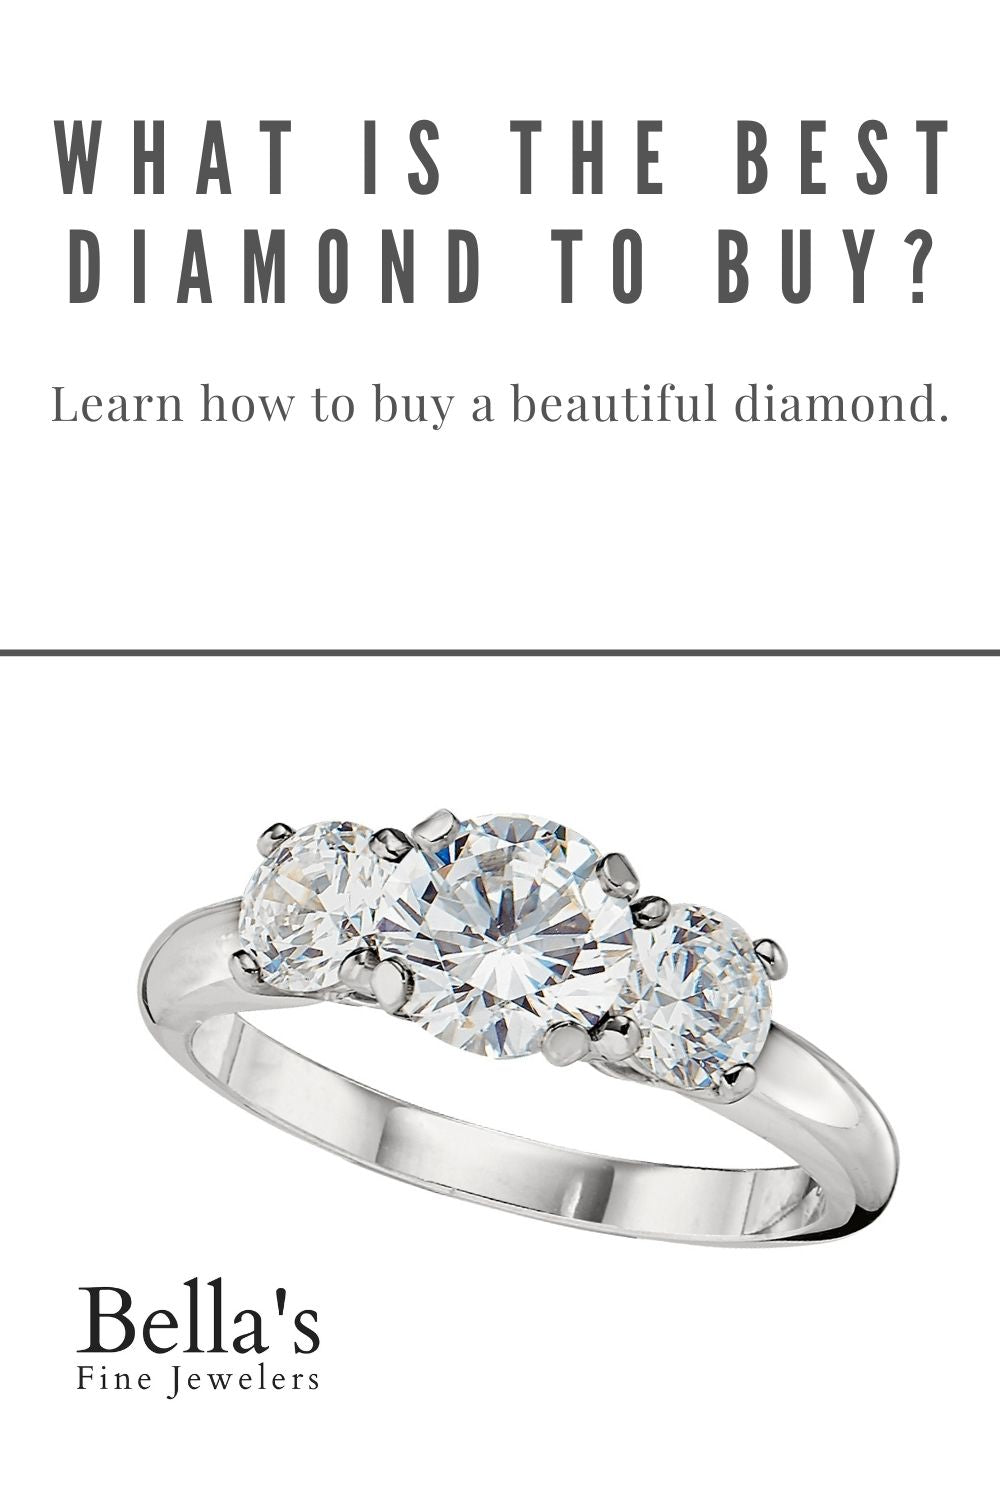 How to buy a beautiful diamond